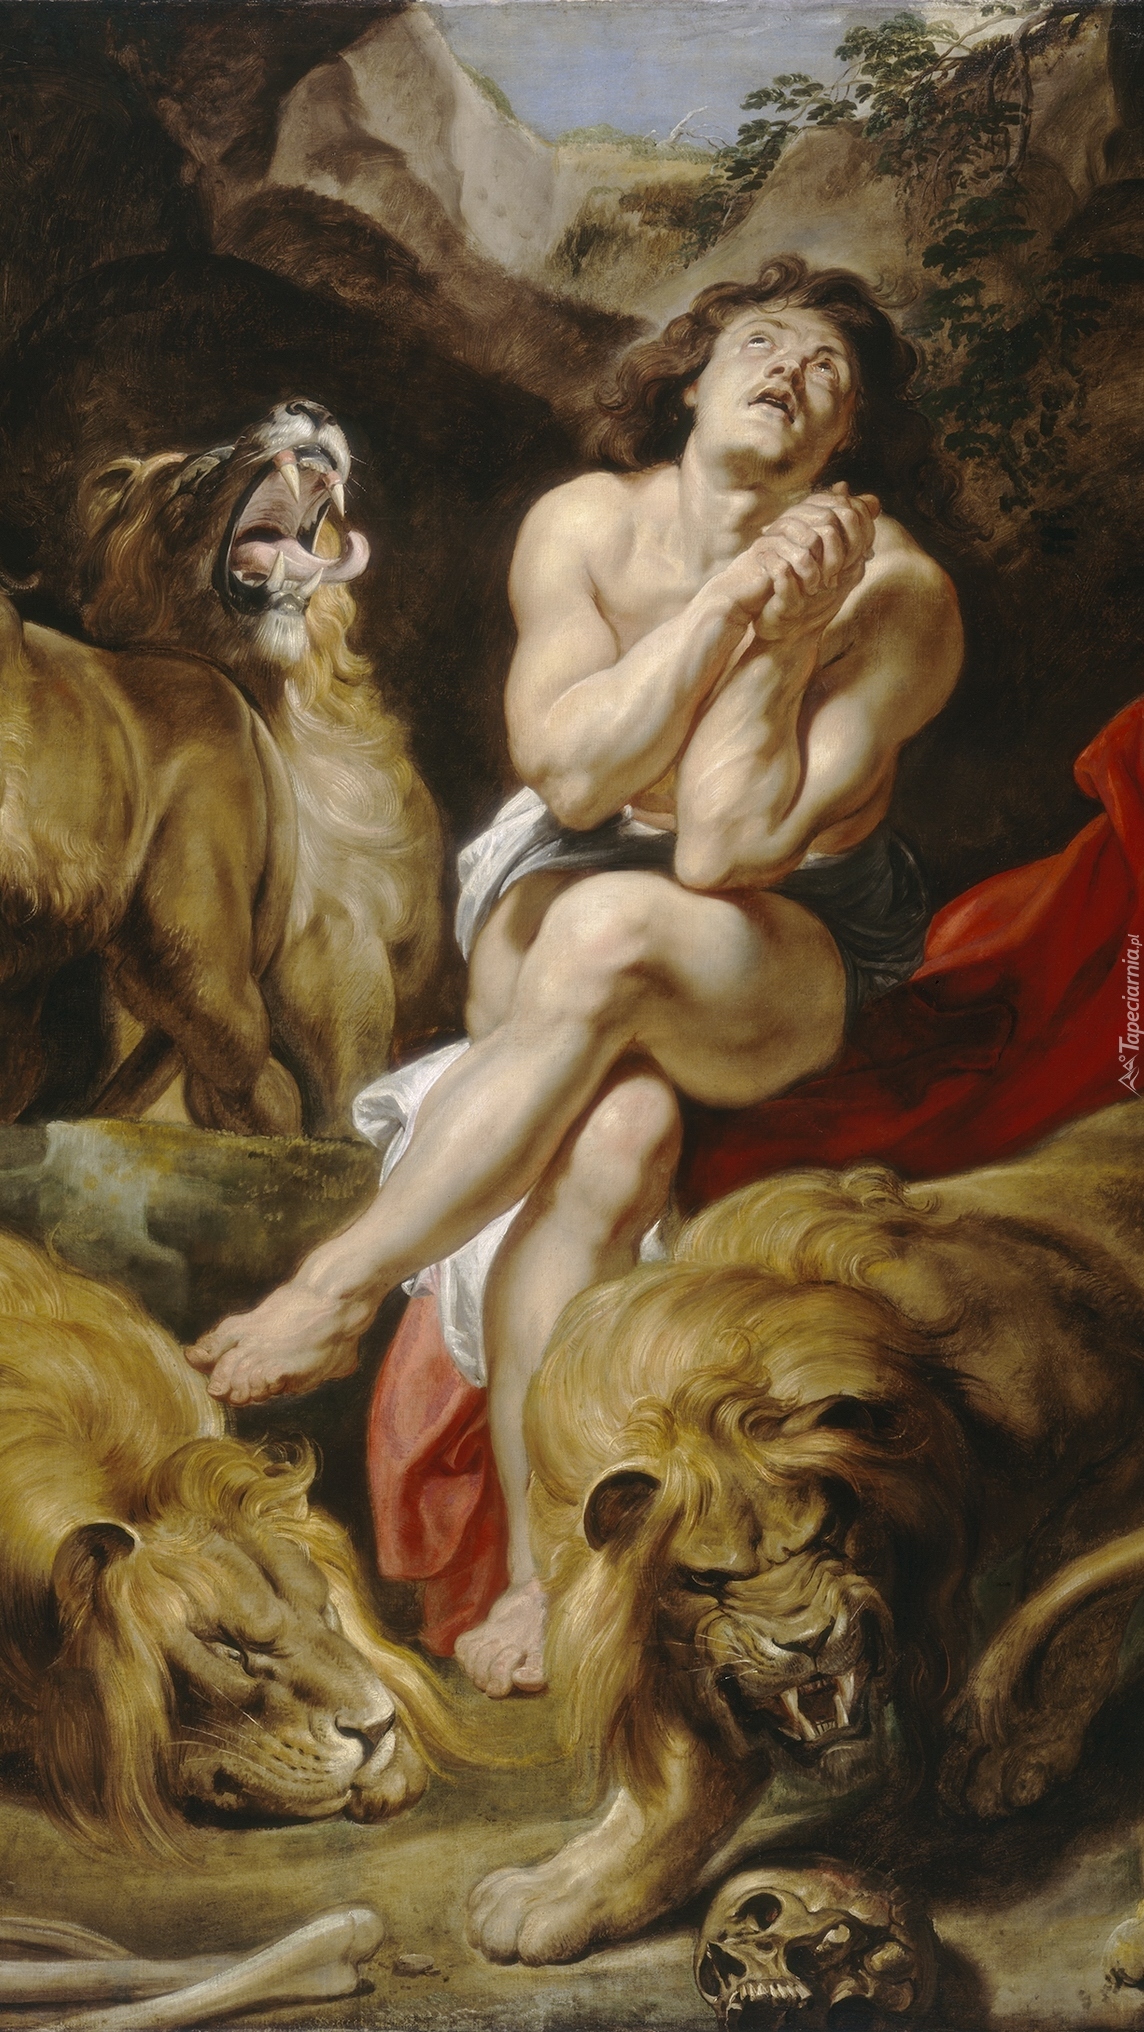 Obraz Petera Paula Rubensa